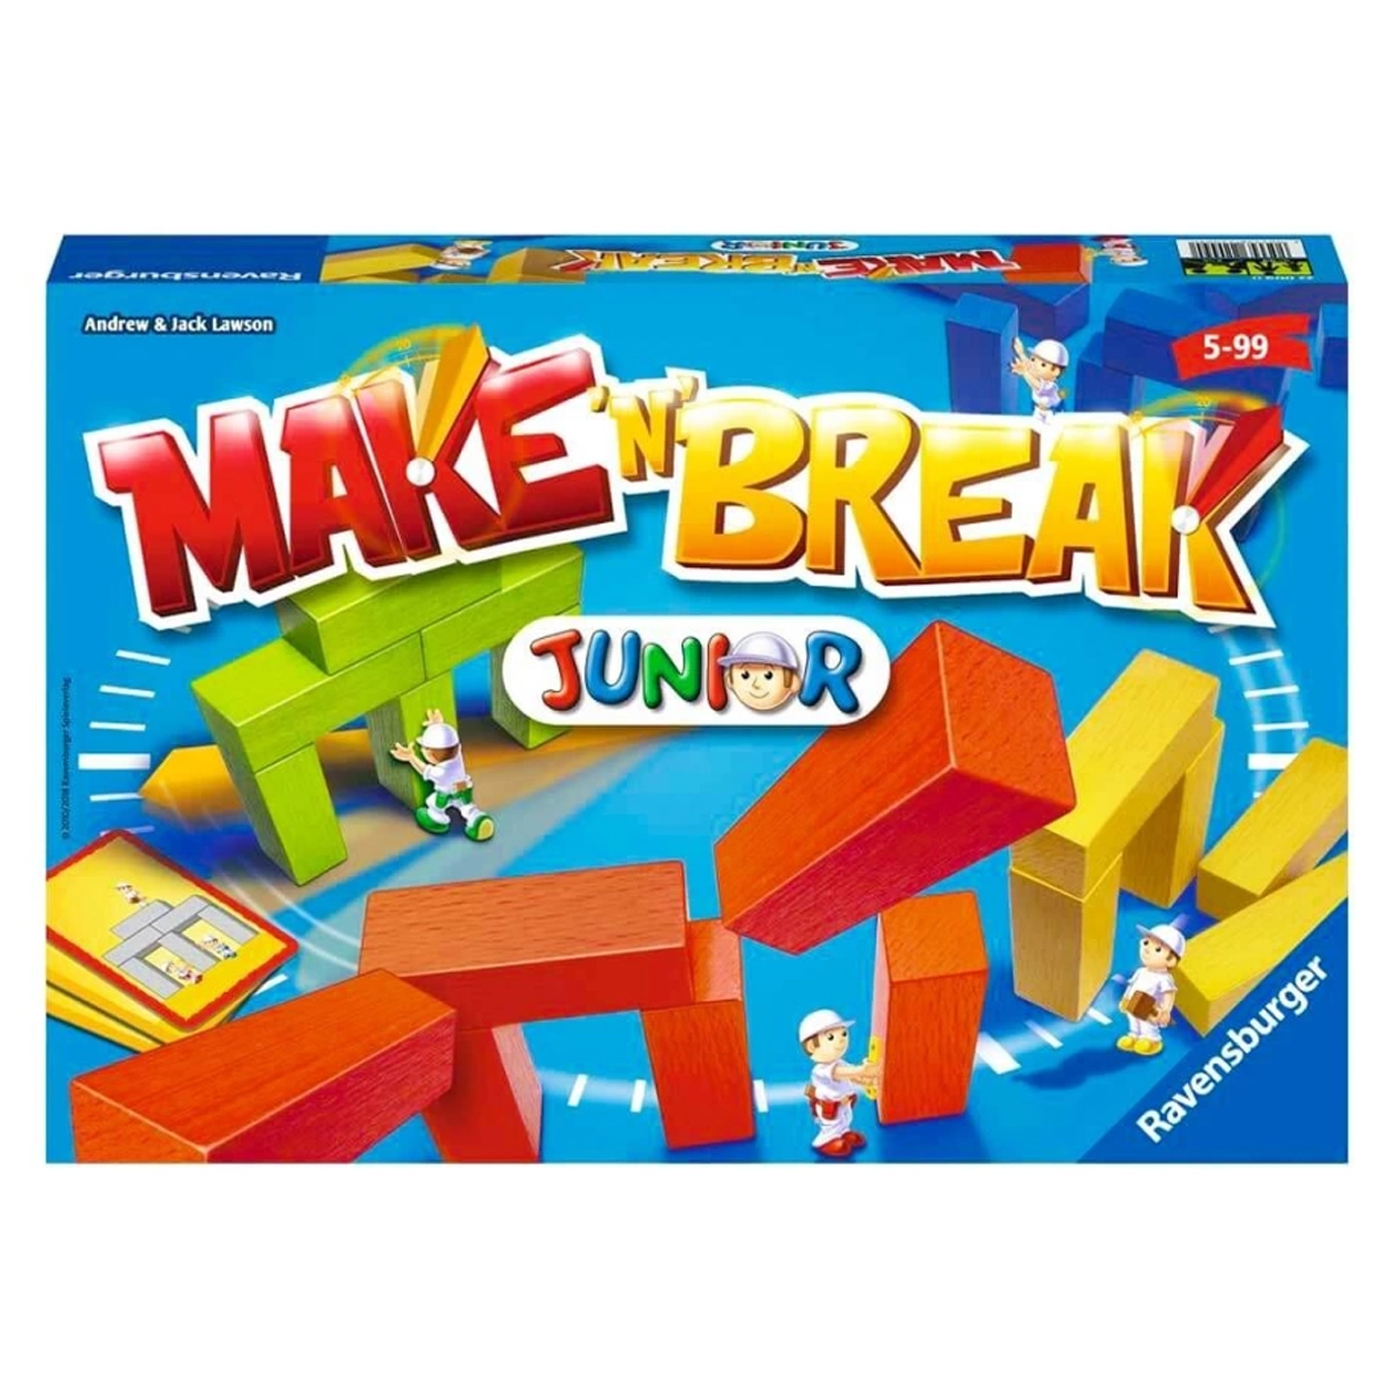  Make'N Break Junior